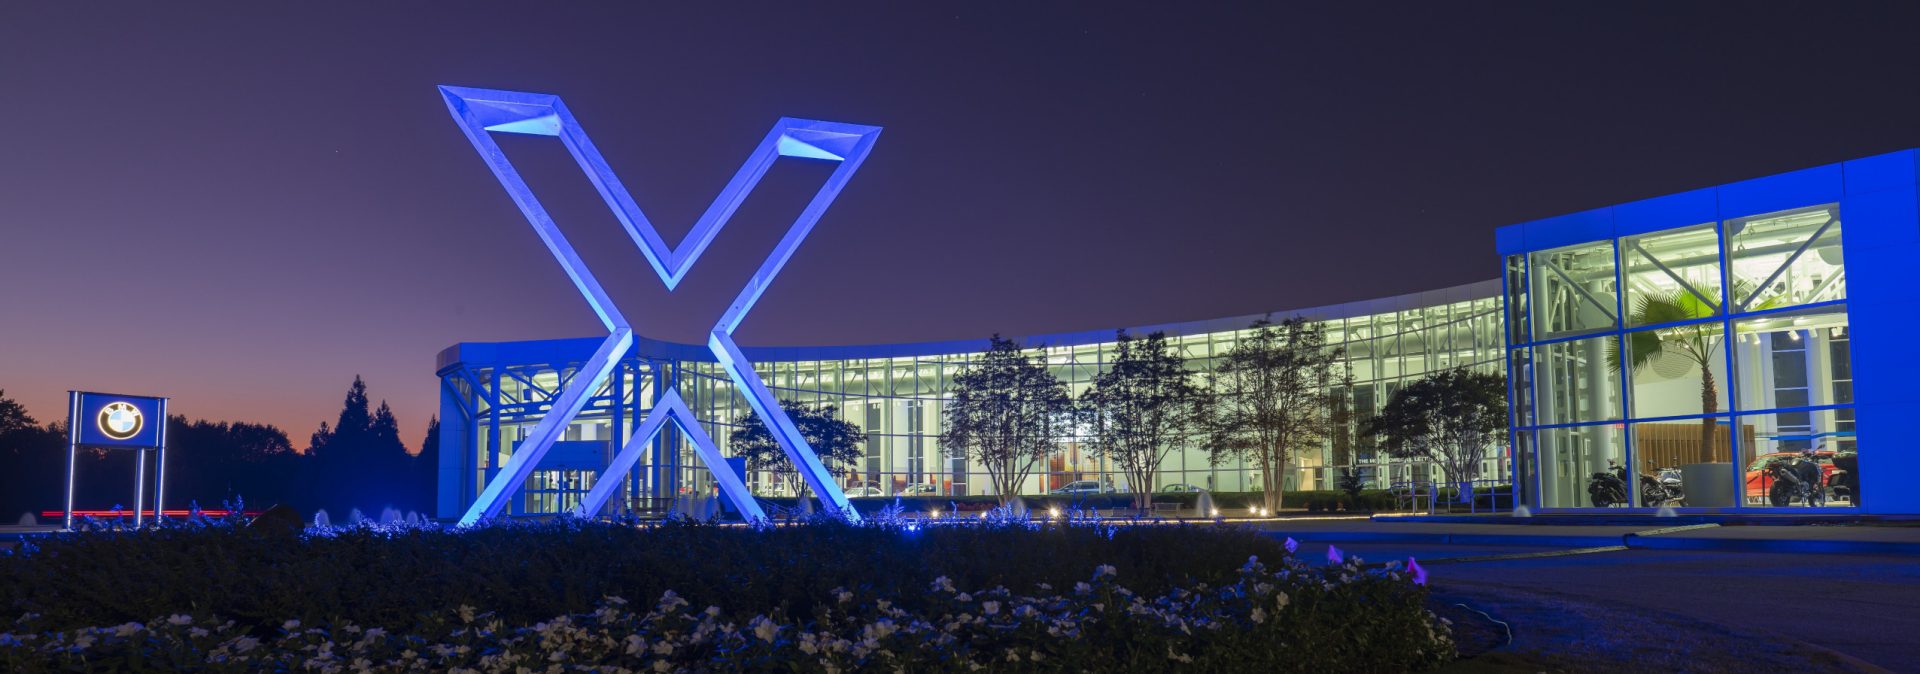 Nighttime shot of BMW Zentrum Museum with X branding logo light up. 